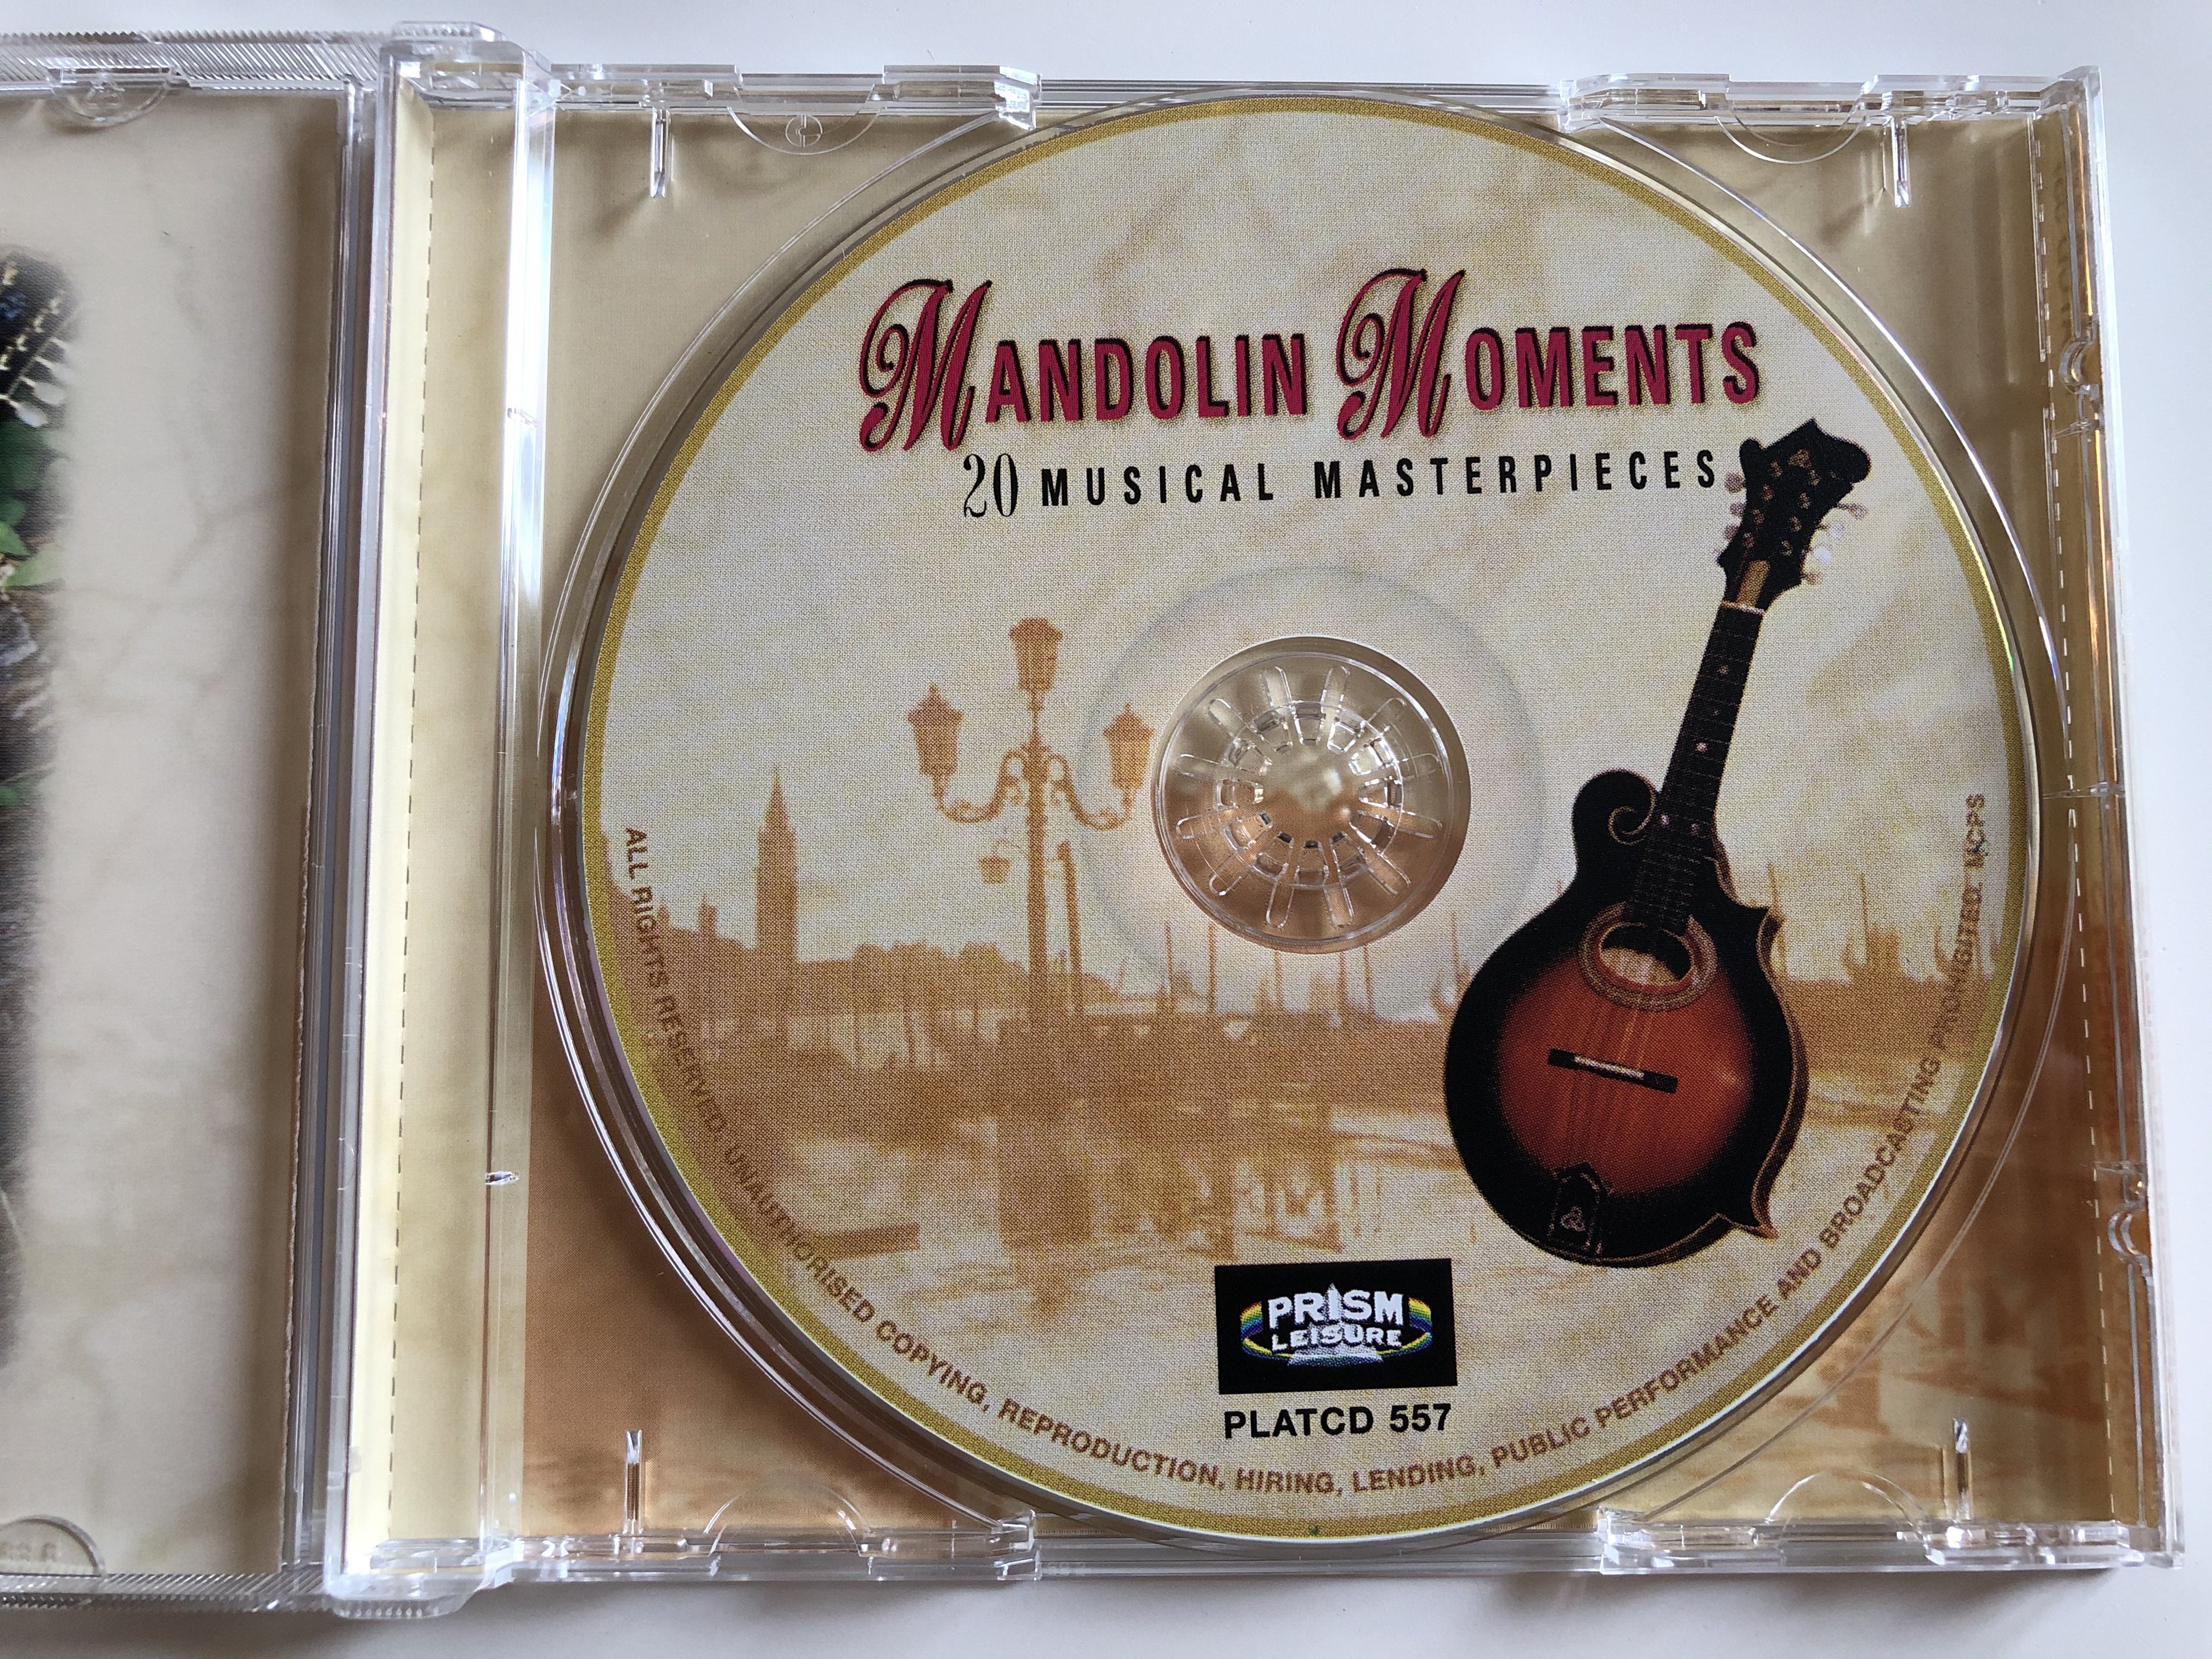 mandolin-moments-20-musical-masterpieces-prism-leisure-audio-cd-1999-platcd-557-4-.jpg